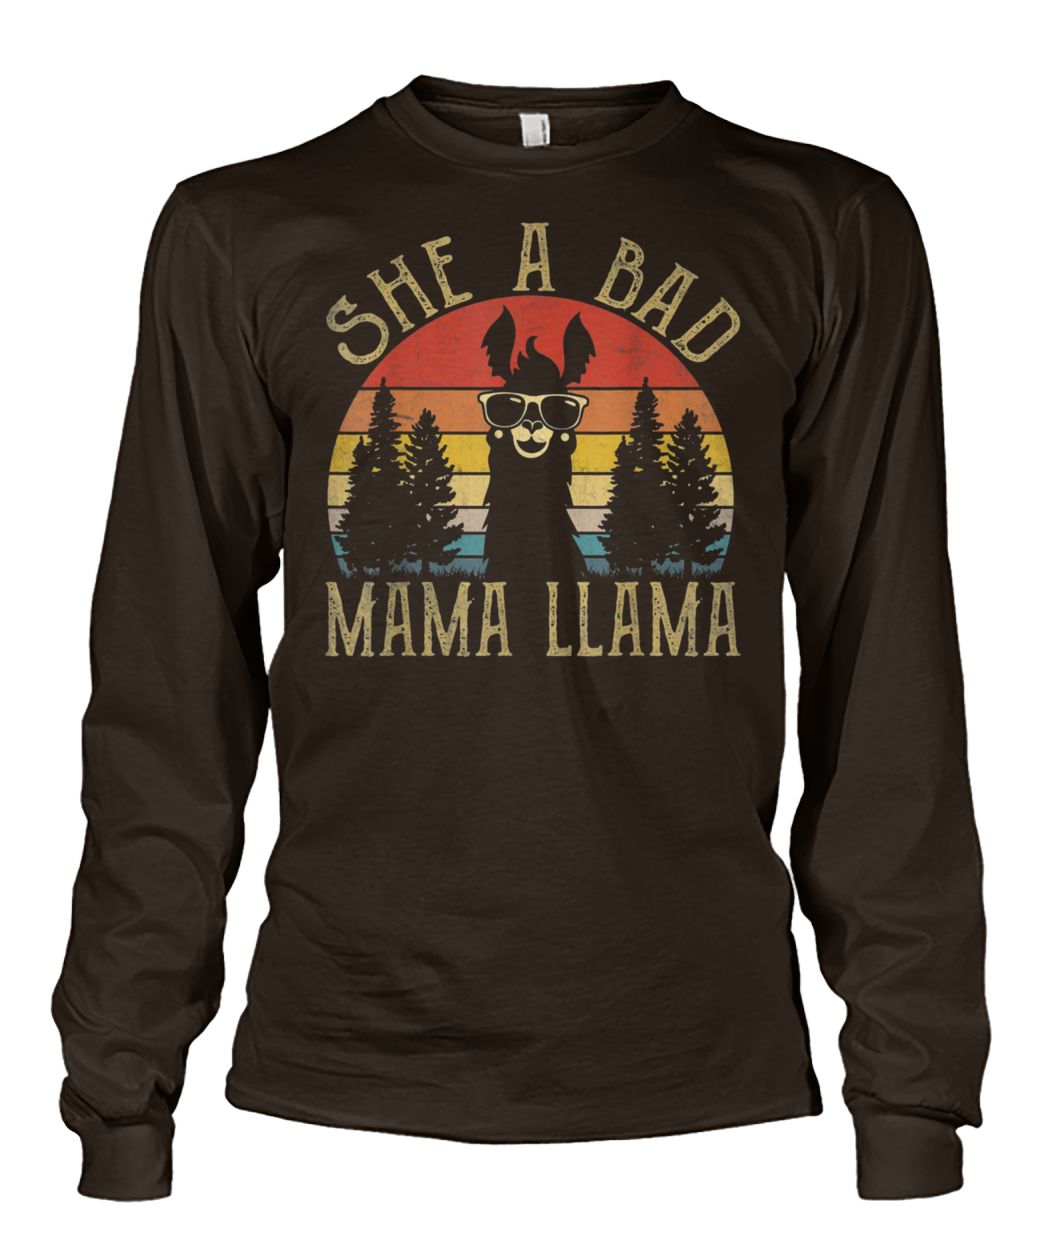 Vintage she's a bad mama llama unisex long sleeve